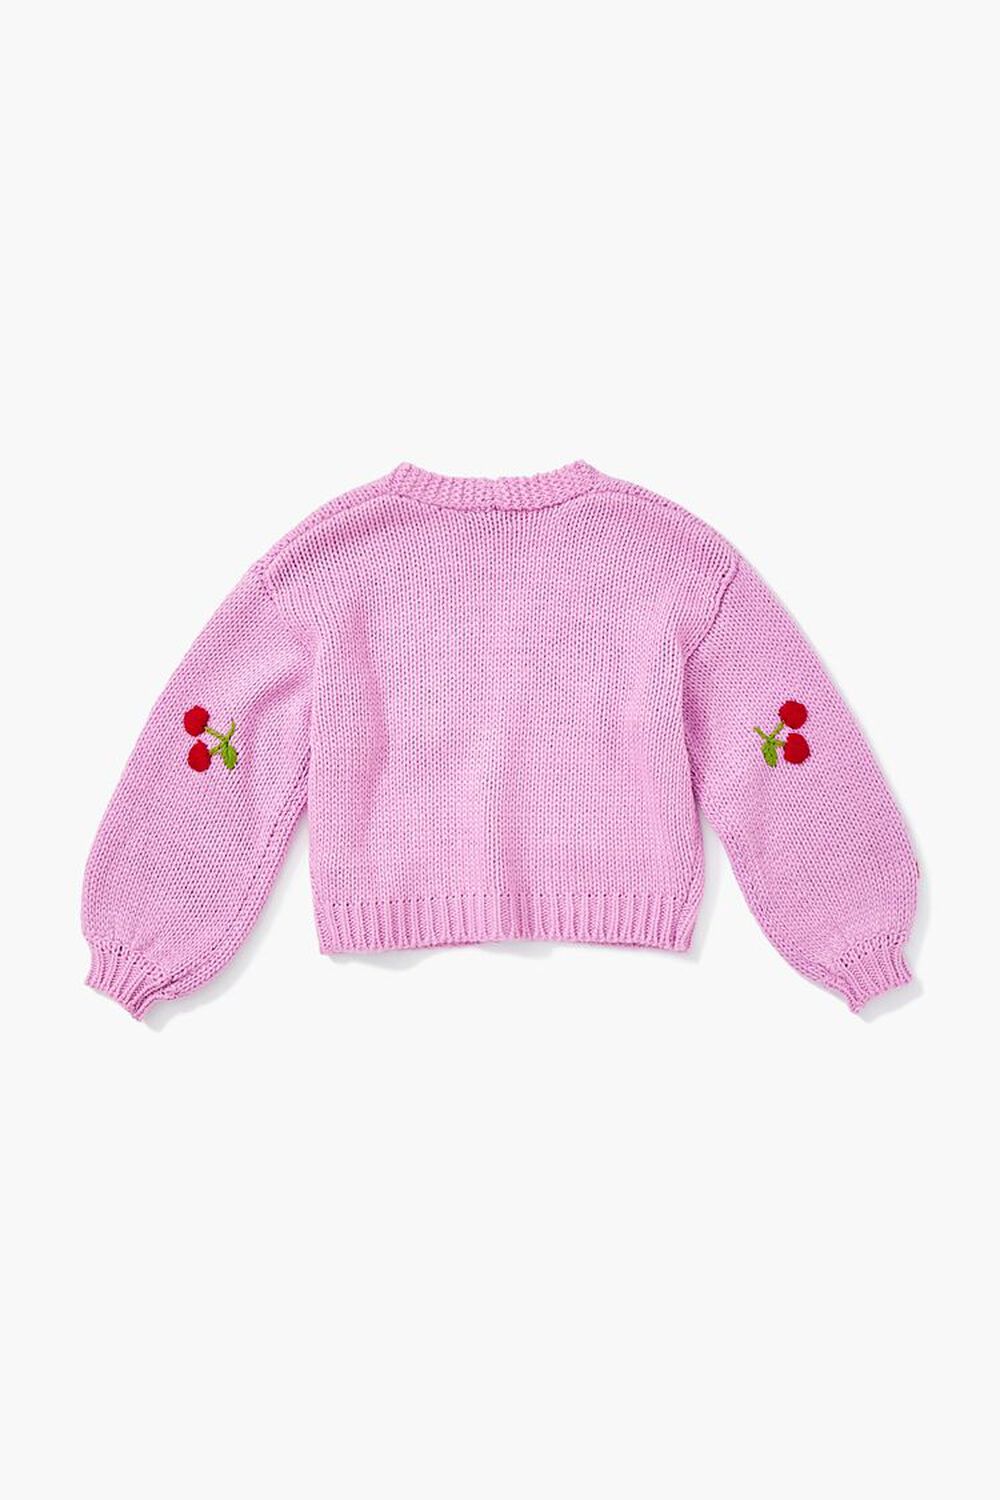 PINK/MULTI Girls Cherry Cardigan Sweater (Kids), image 2